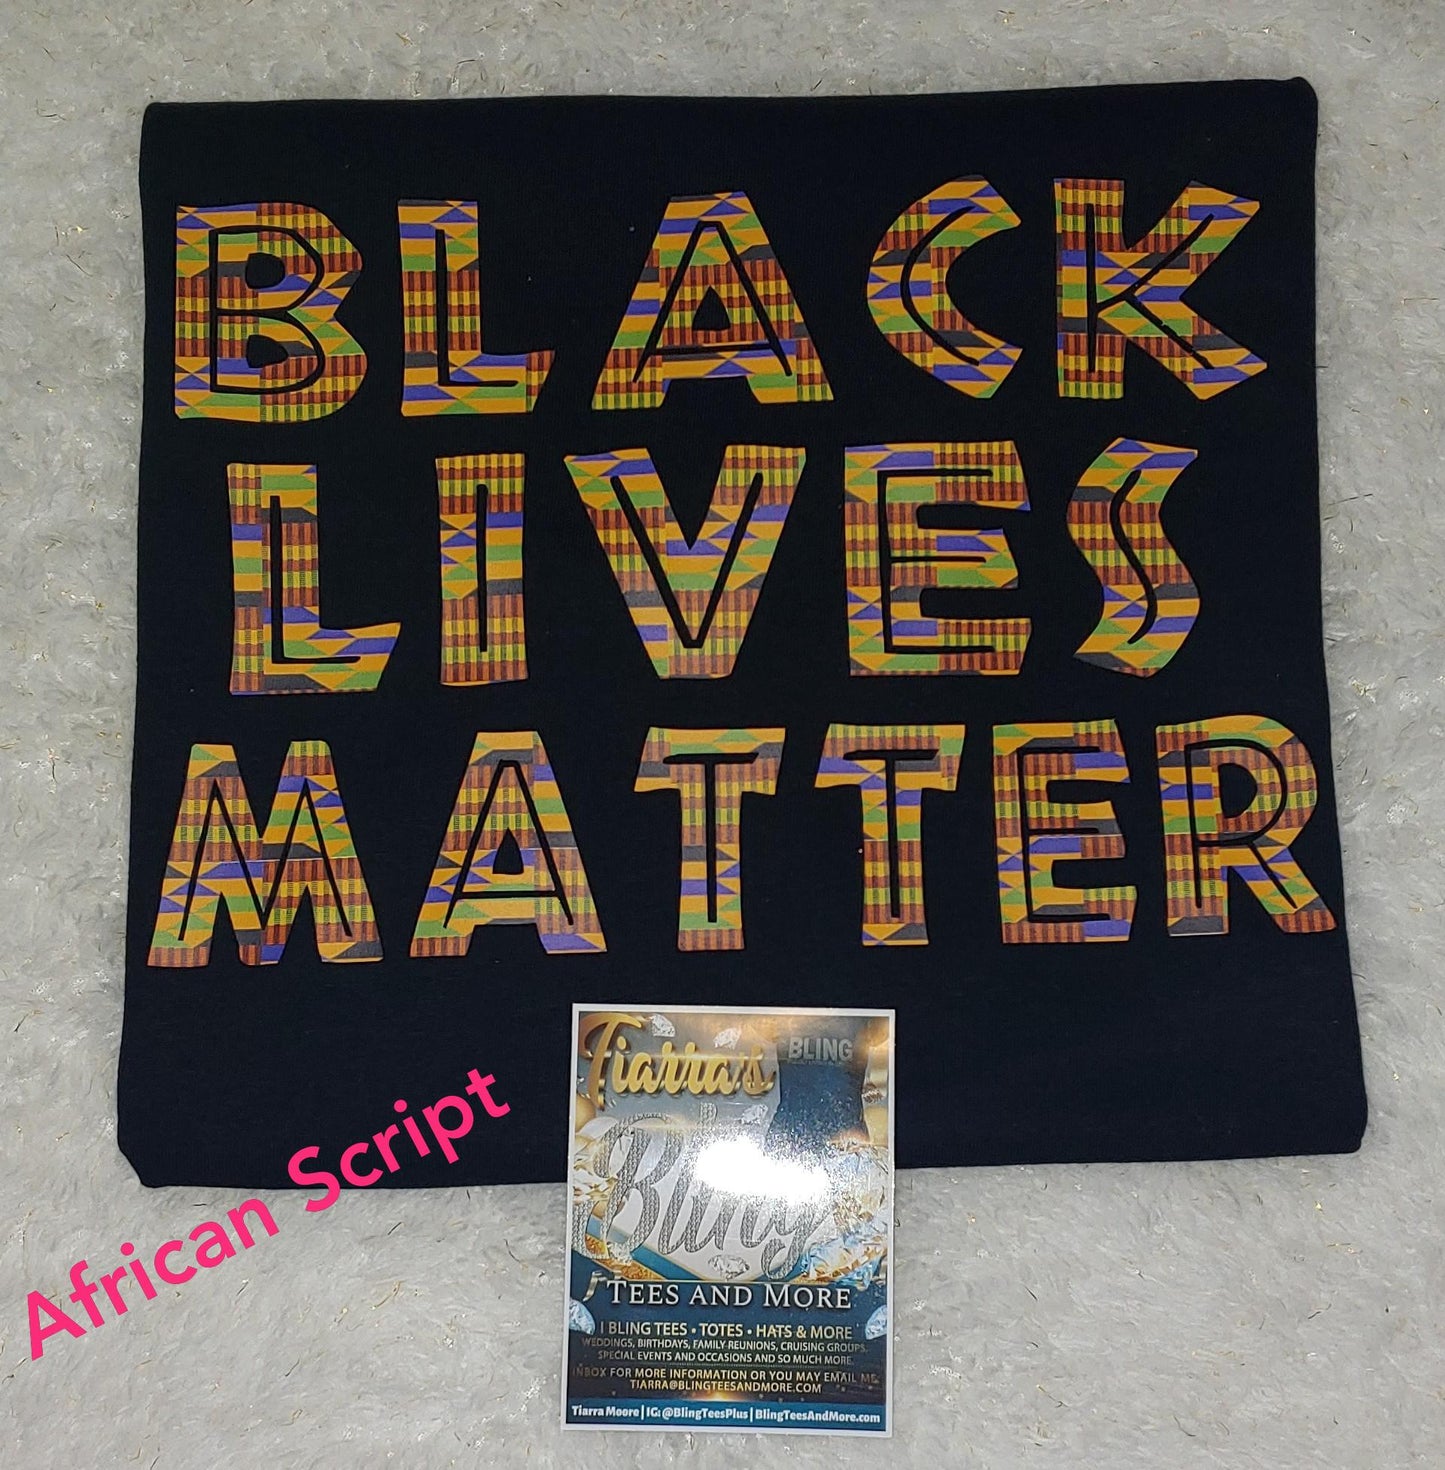 Kente Print Black Lives Matter T-Shirt